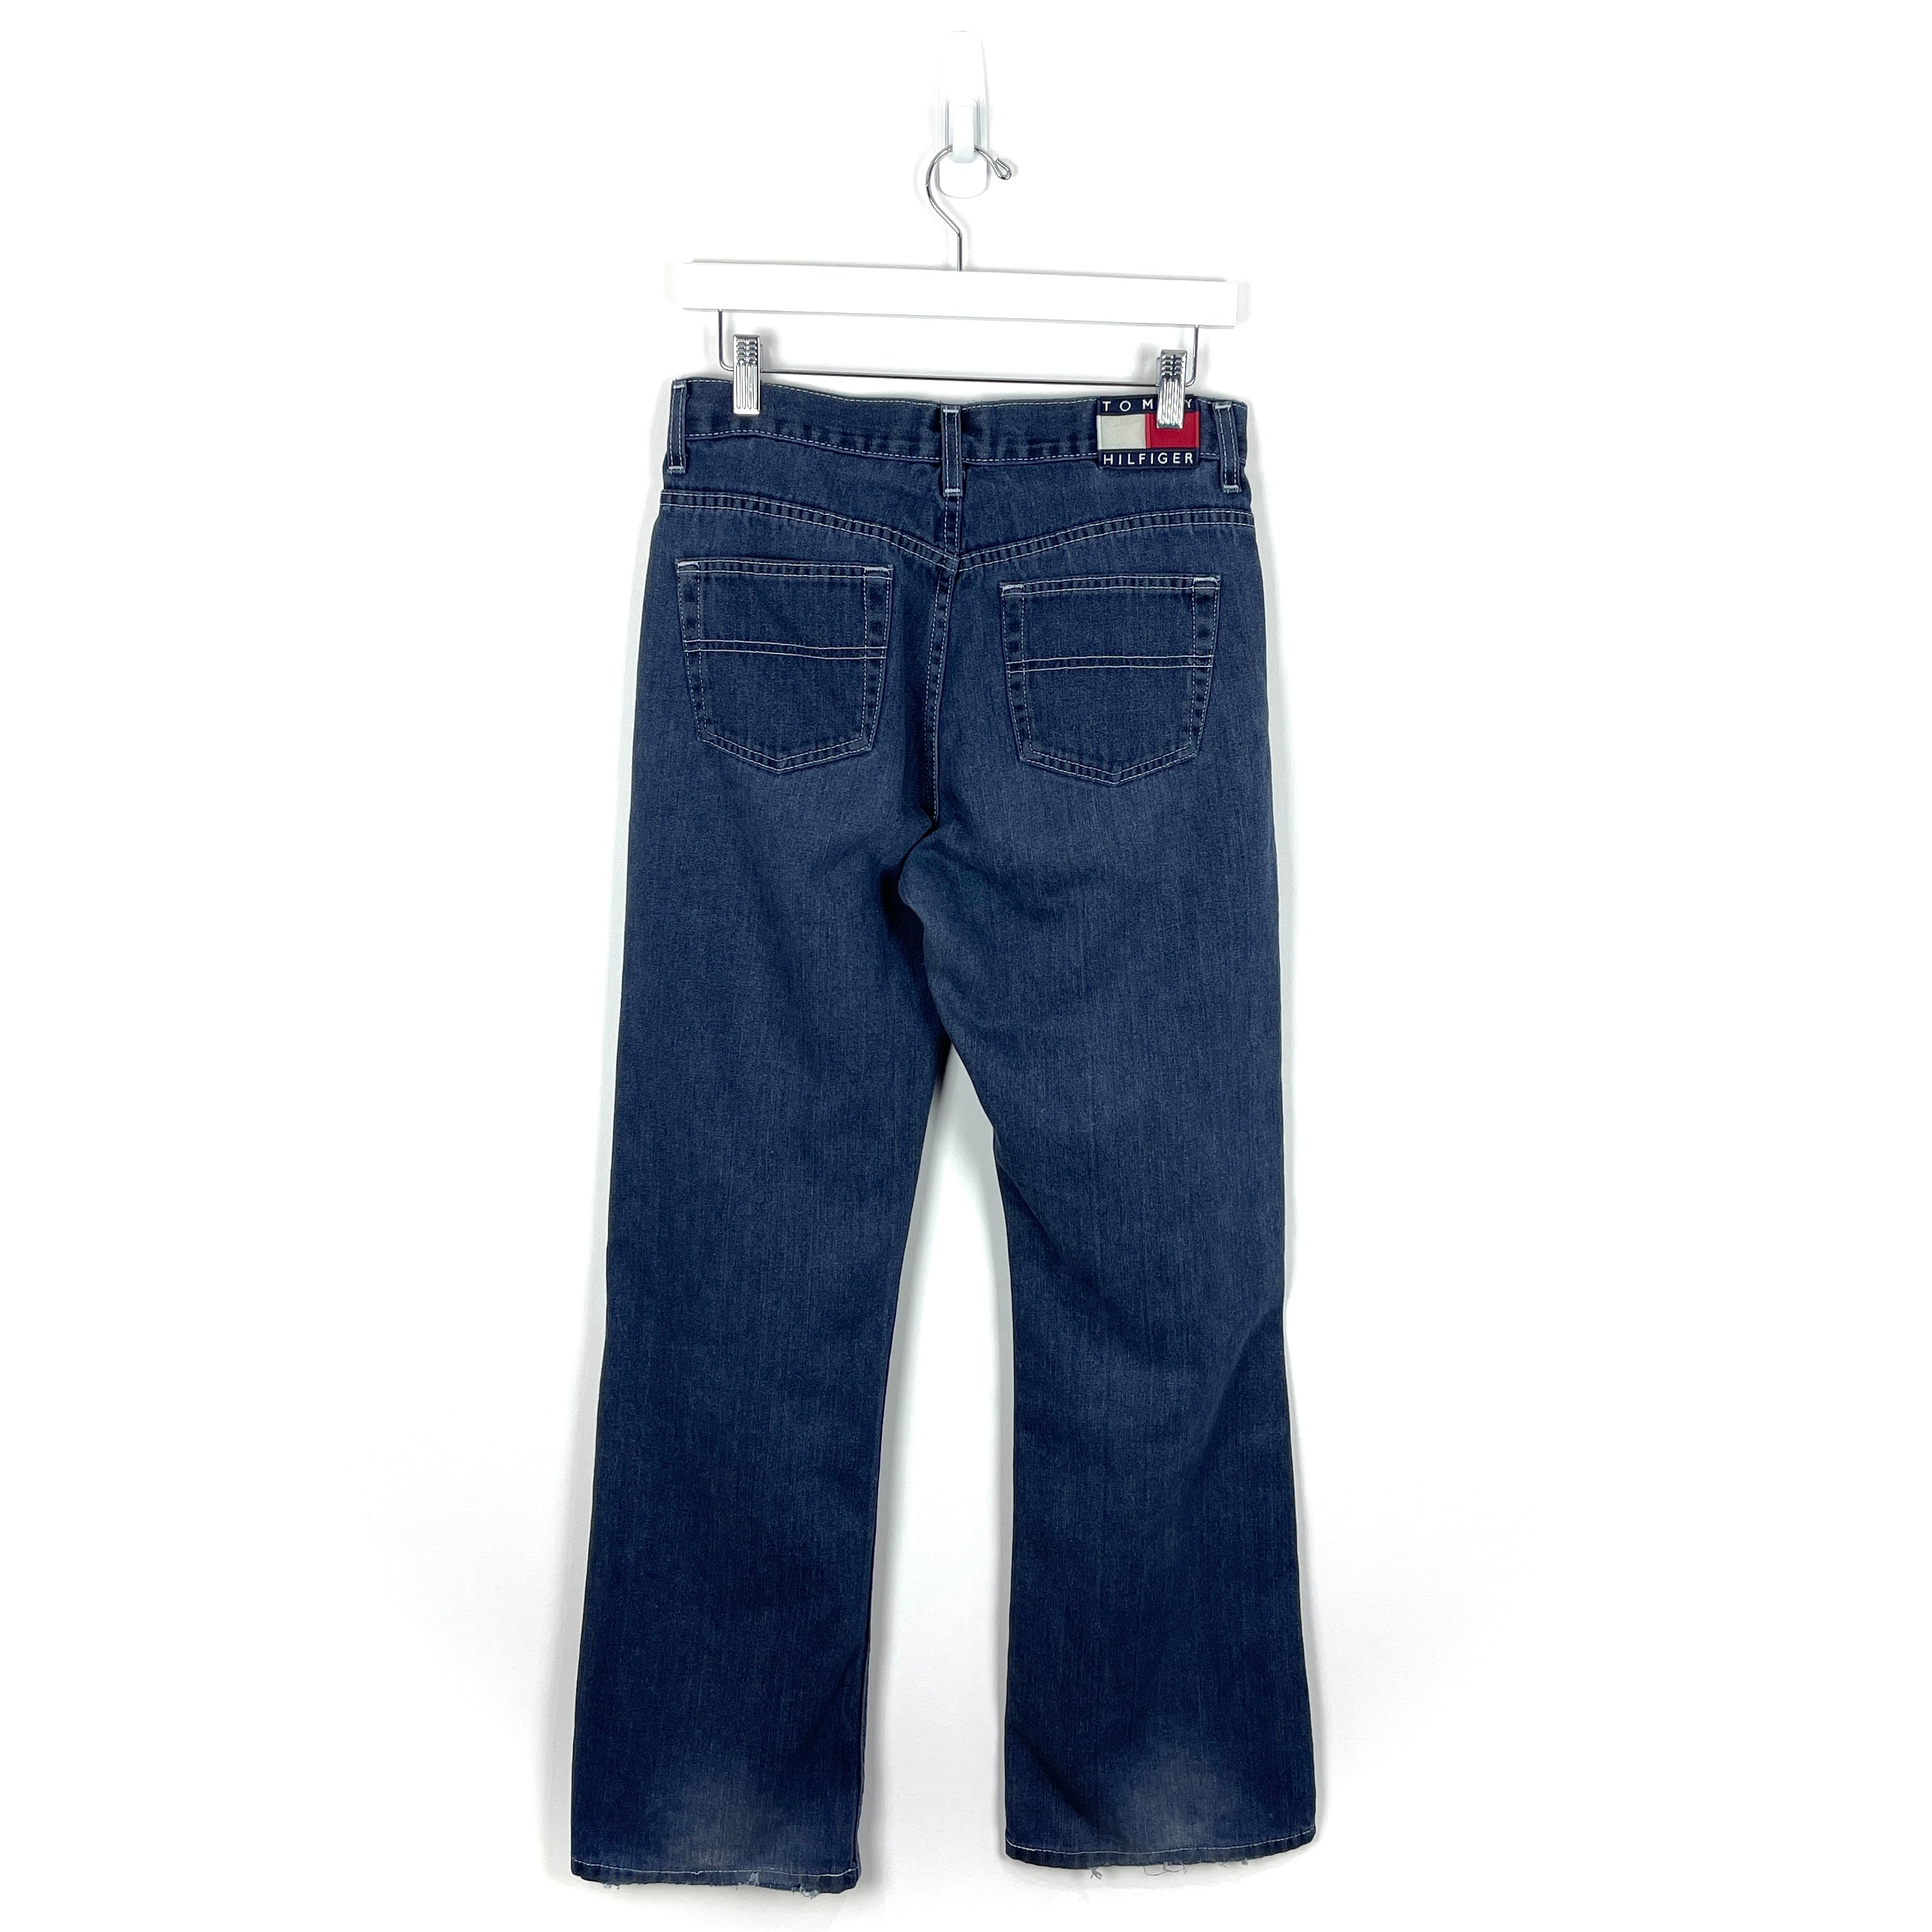 Vintage Tommy Hilfiger Jeans - Women's 30/29